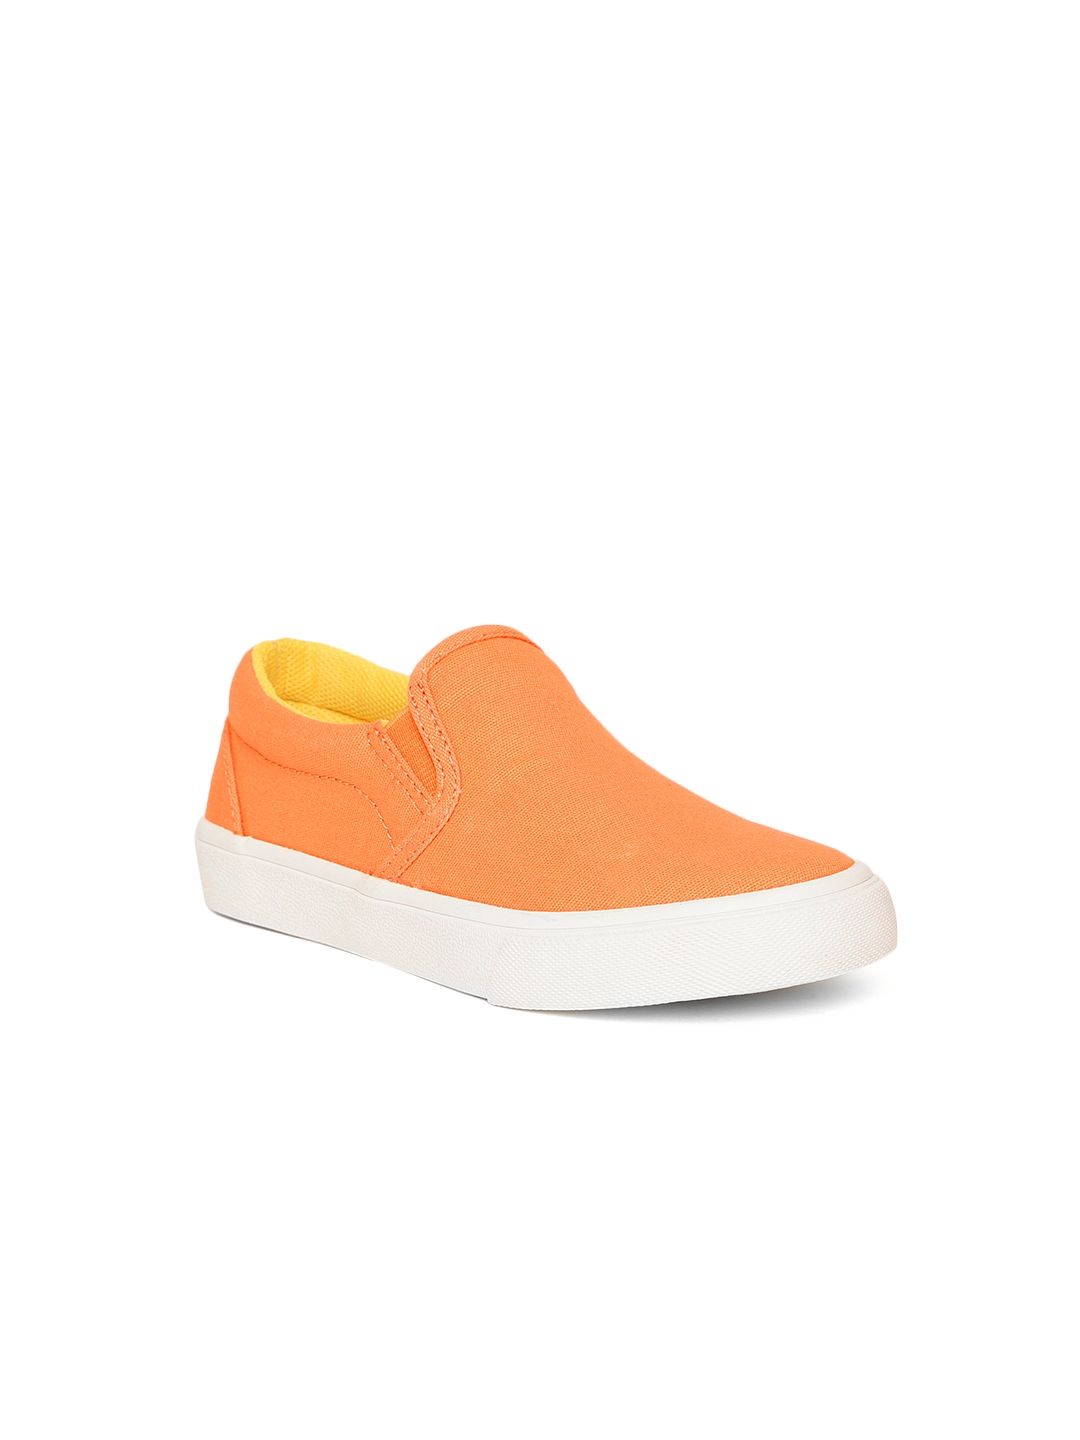 Orange Slip Ons - Casual Shoes 